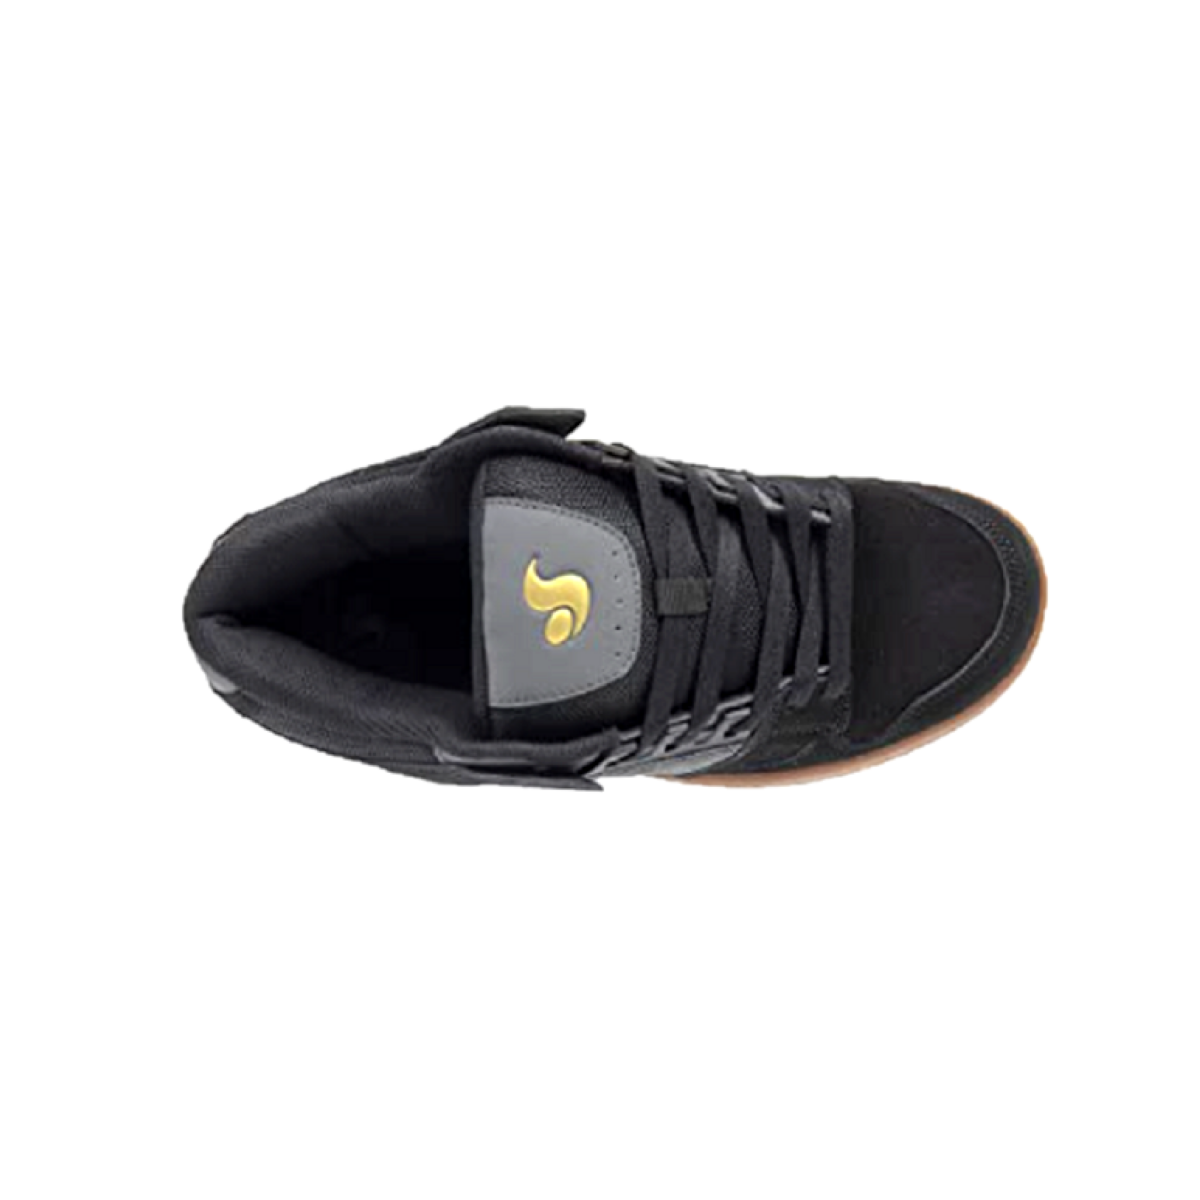 DVS F0000233964 CELSIUS MN'S (Medium) Black/Charcoal/Gum Suede/Leather/Nubuck Skate Shoes